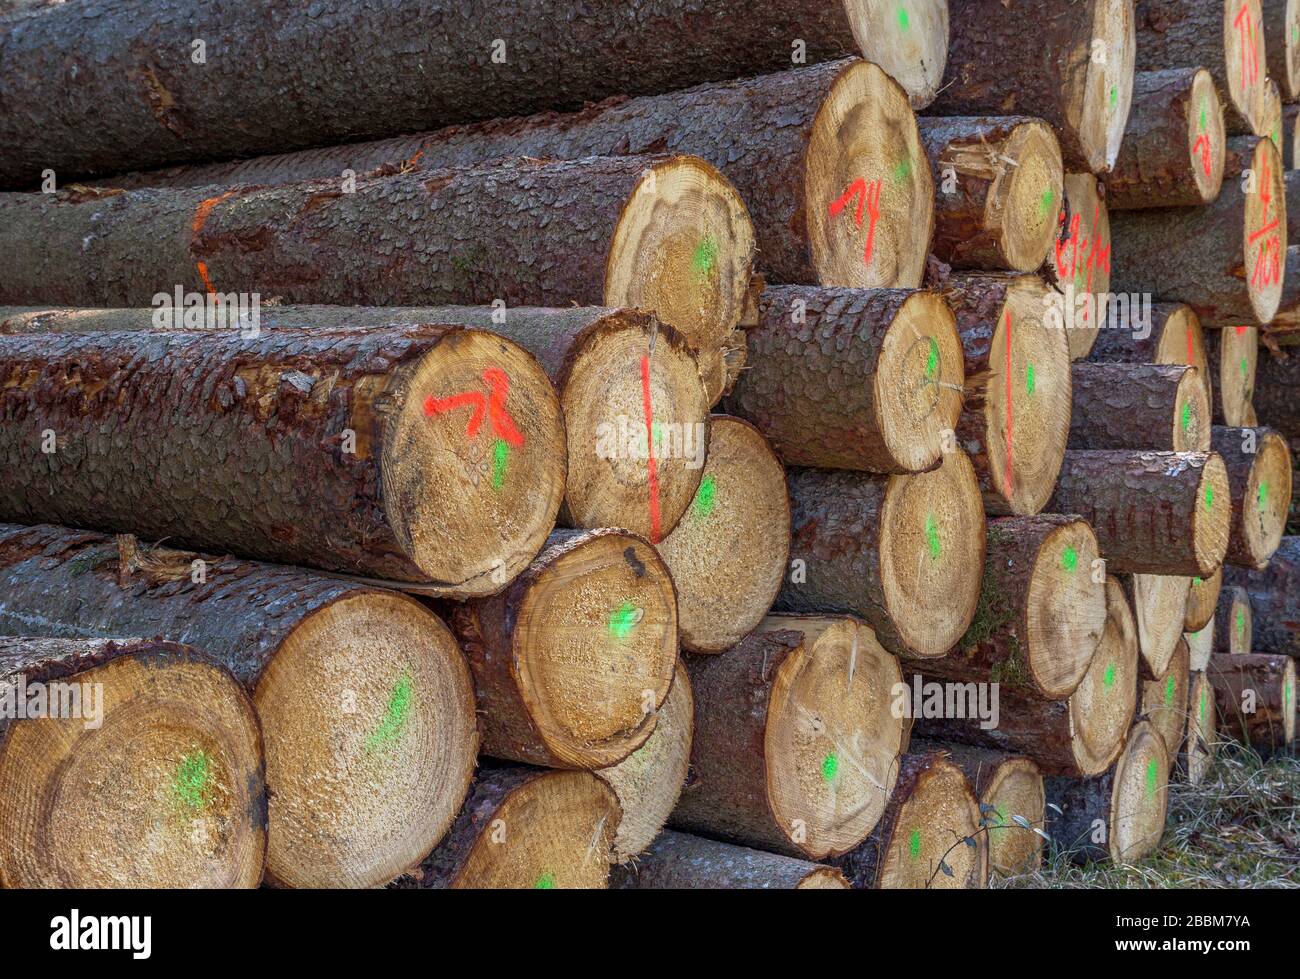 Holzindustrie, gestapelte Holzstämme, Bayern, Deutschland, Europa Stockfoto